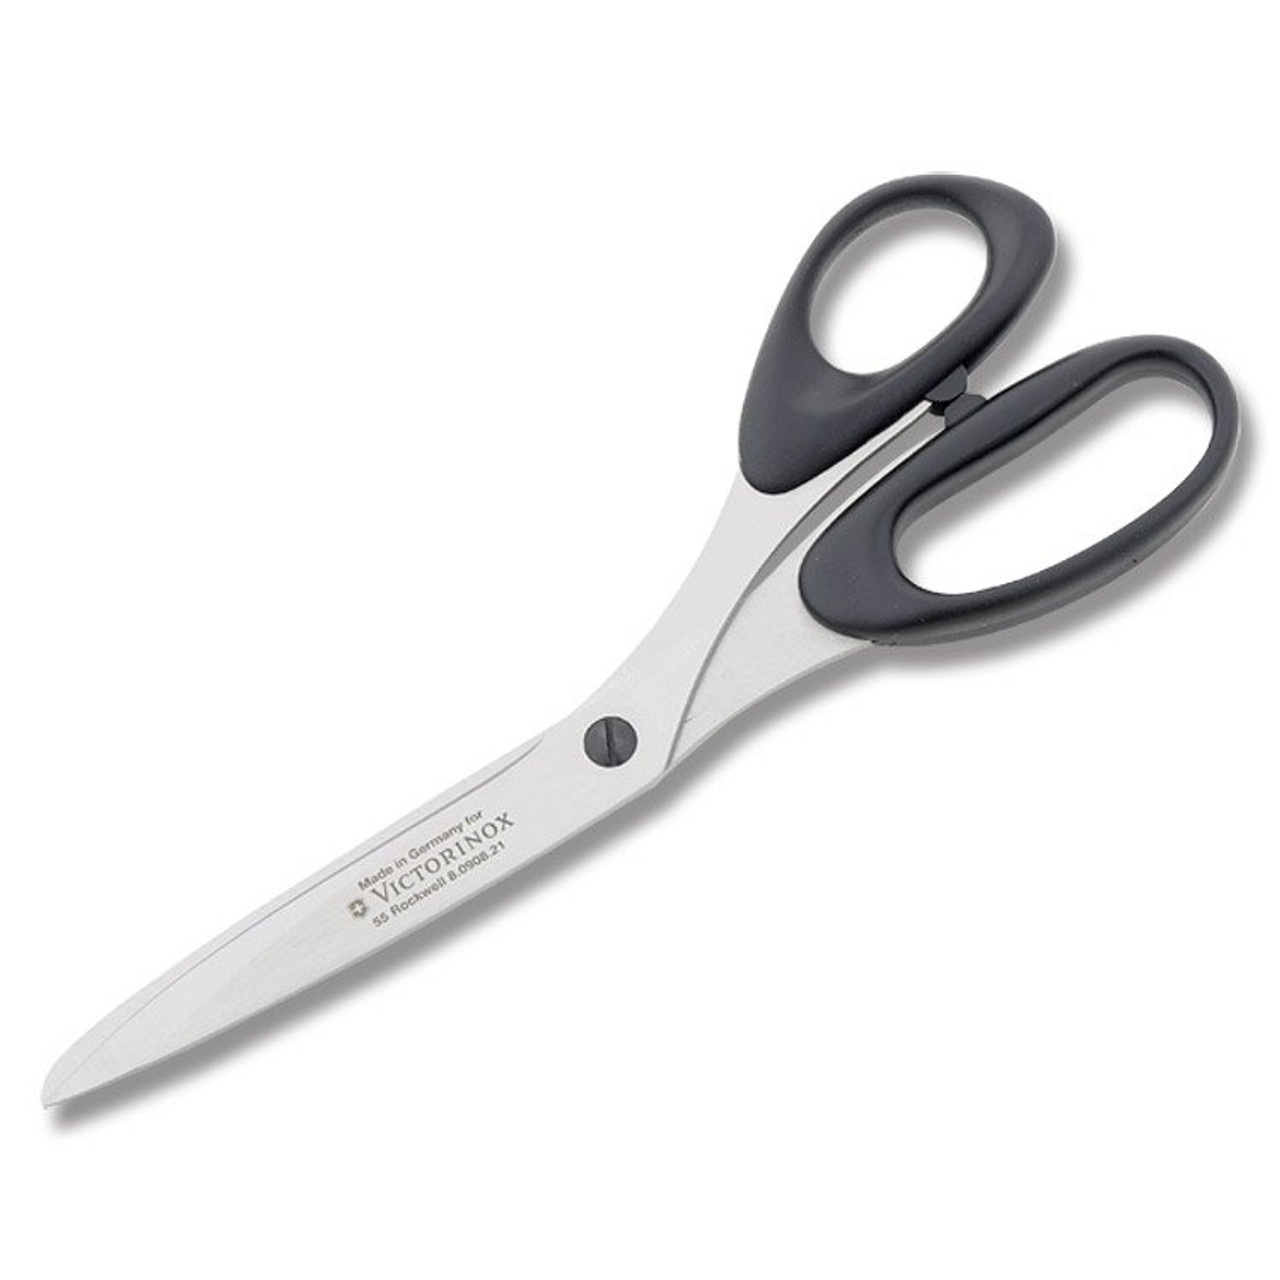 Stork Scissors - Smoky Mountain Knife Works